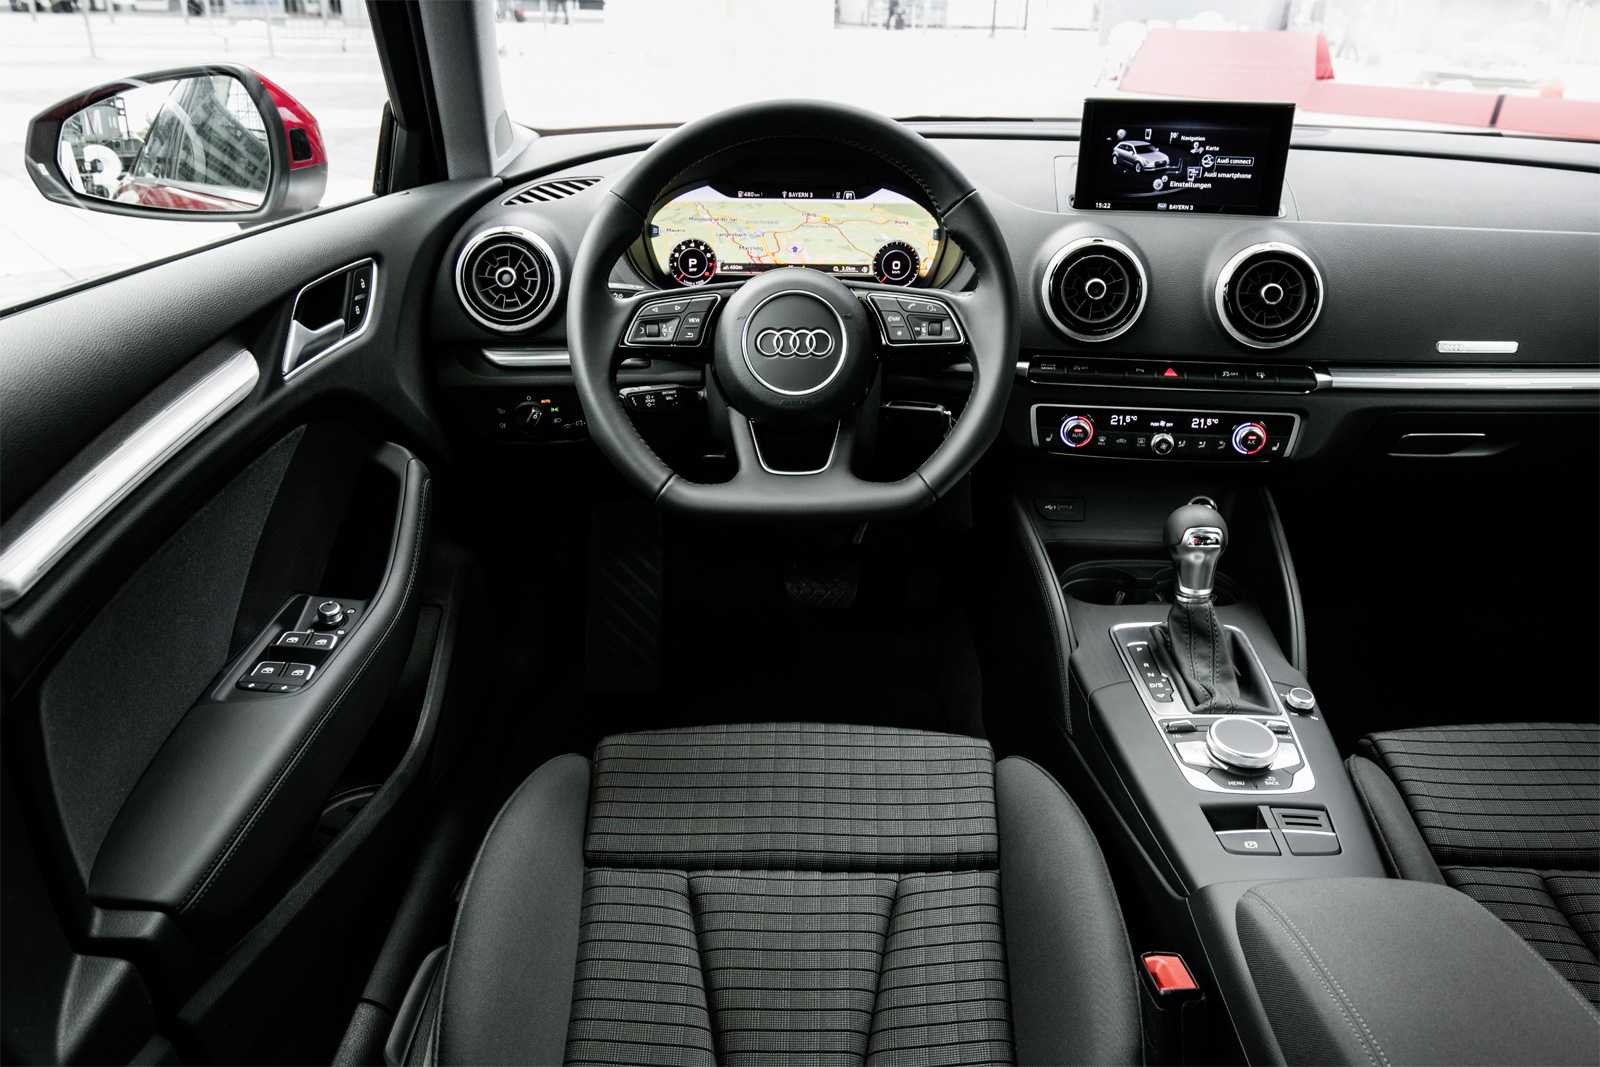 Audi a3 ii (8p, 2003-2012) - скрытые фигуры